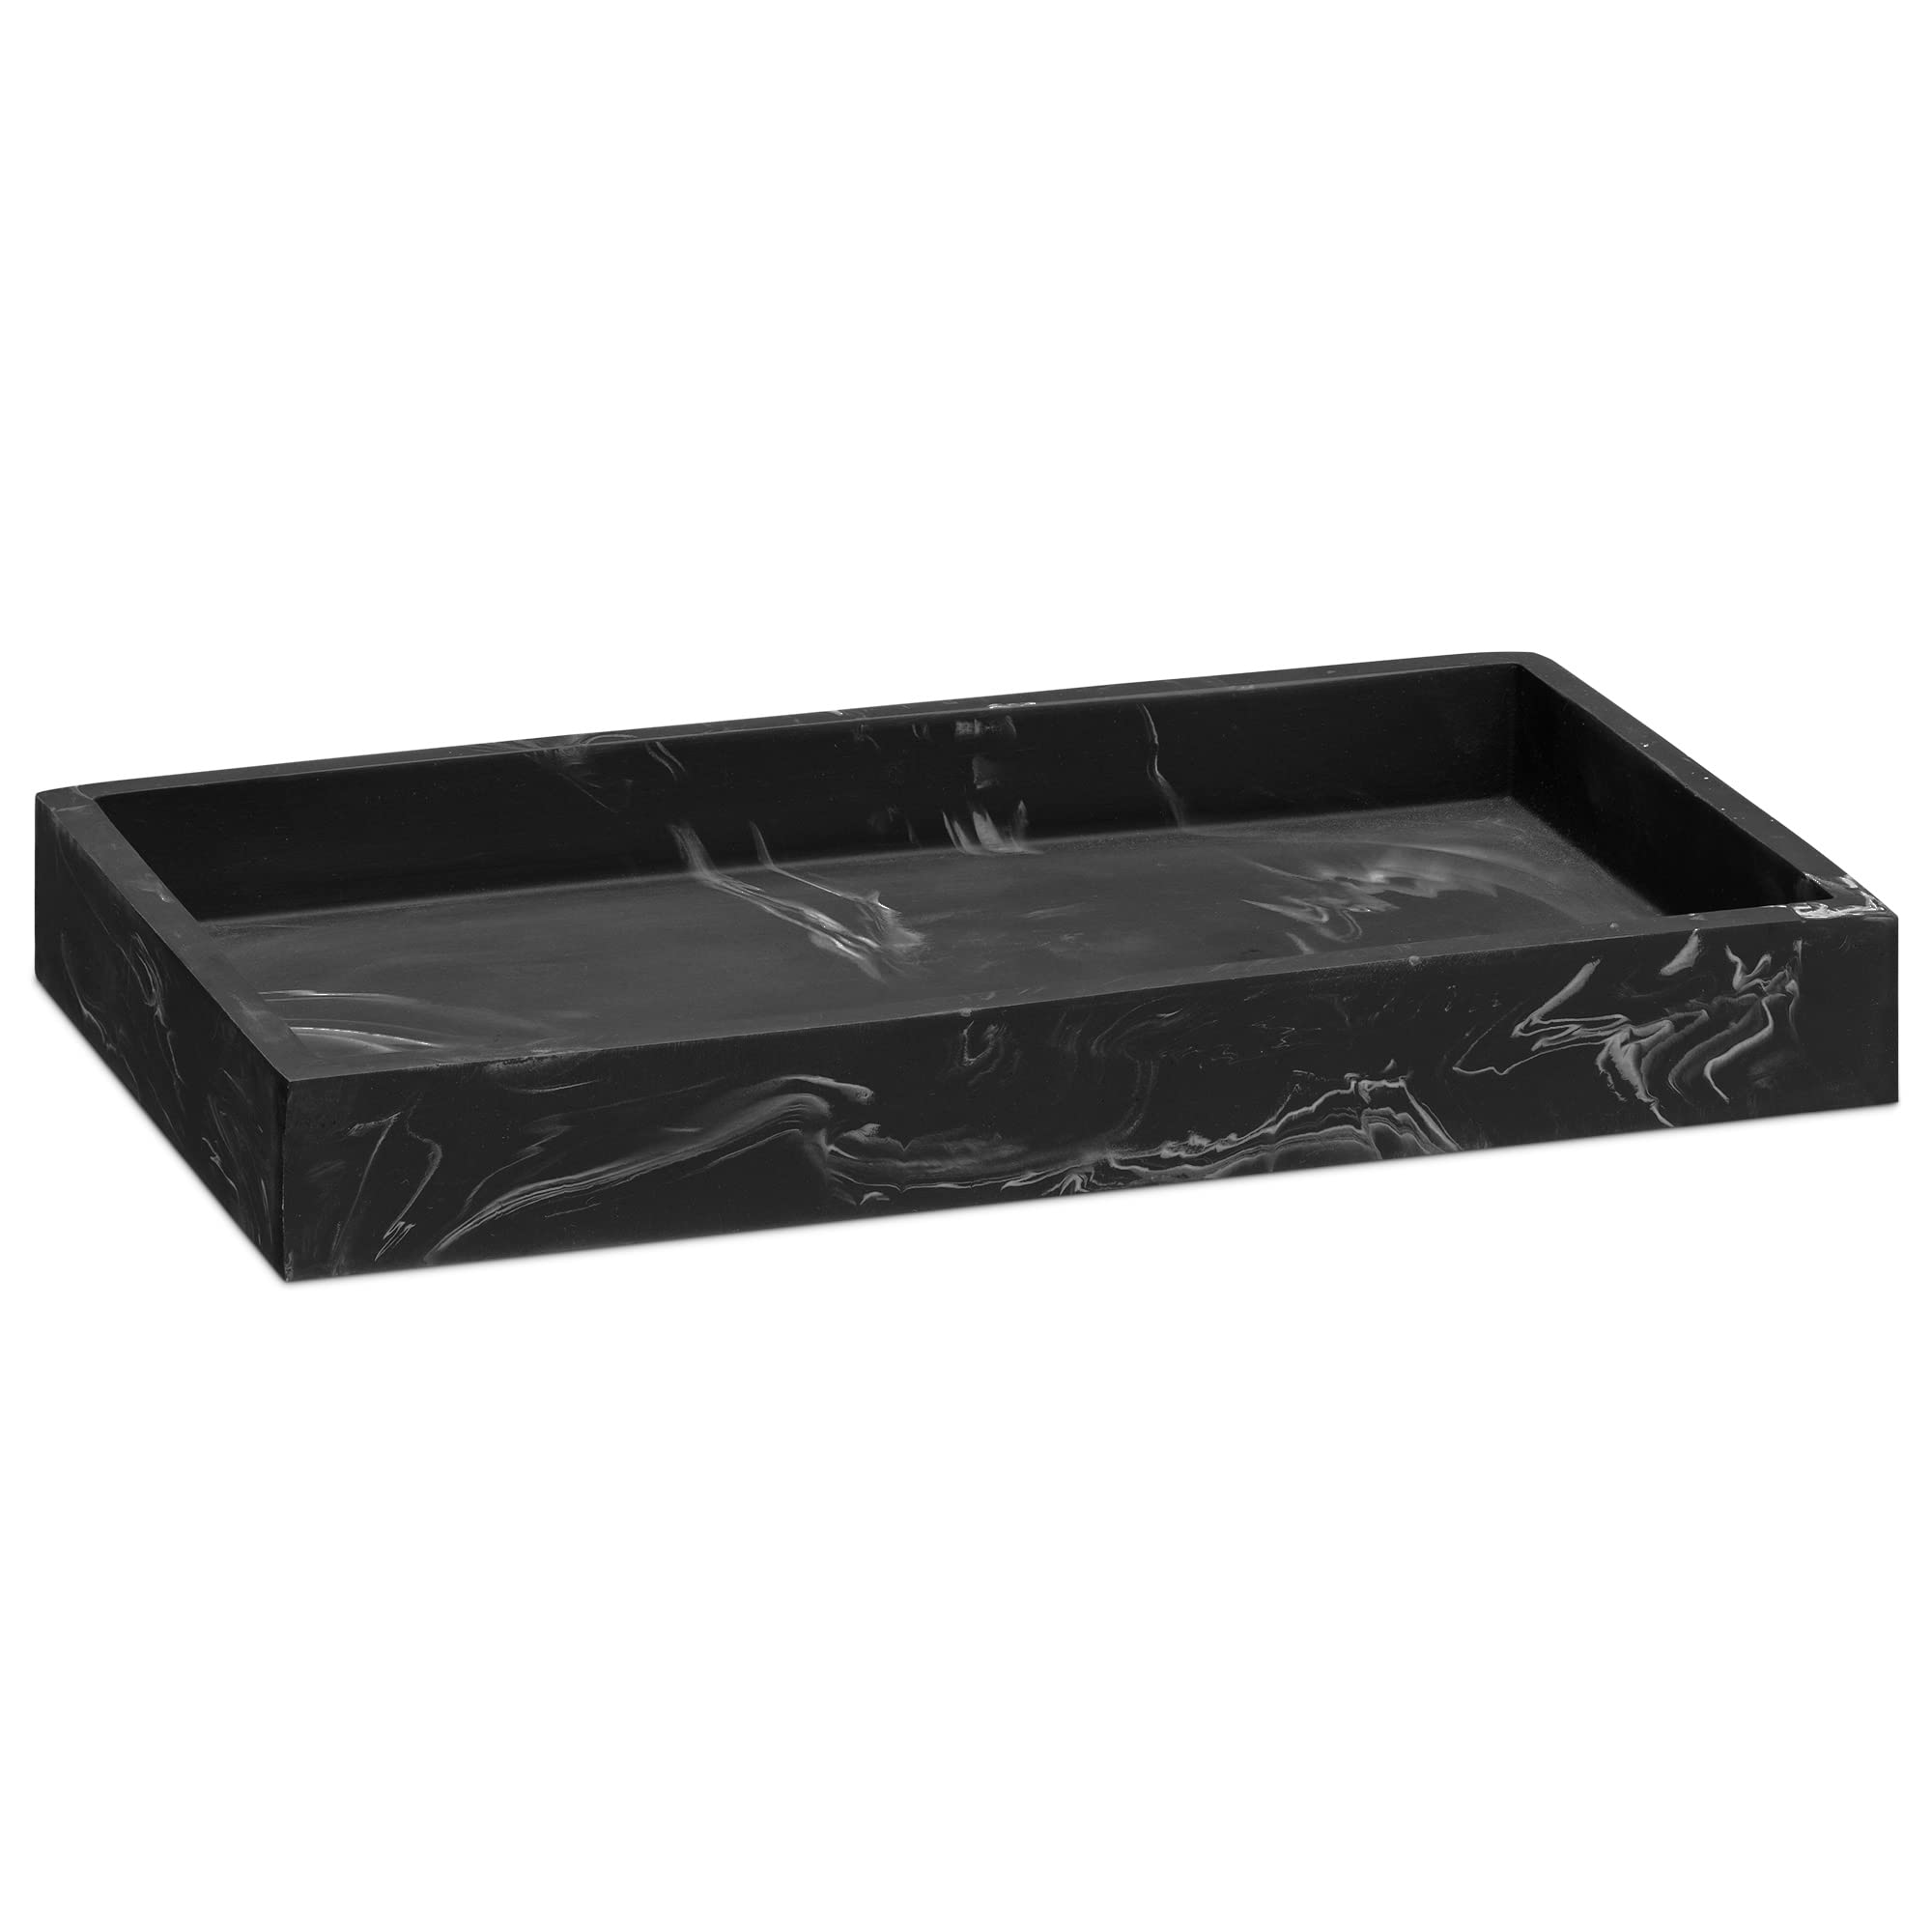 Navaris Black Marble Resin Vanity Tray - 925 x 492 Bathroom Organizer Dish - Decorative Holder for Jewelry, Kitchen counter Top,